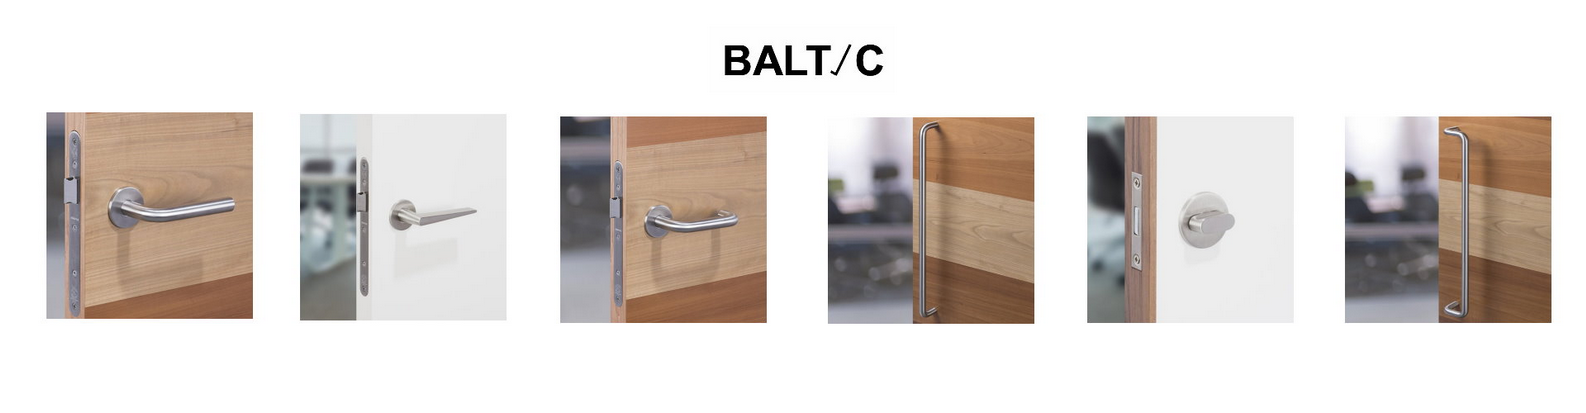 BALTIC - Modern Contemporary Danish Design